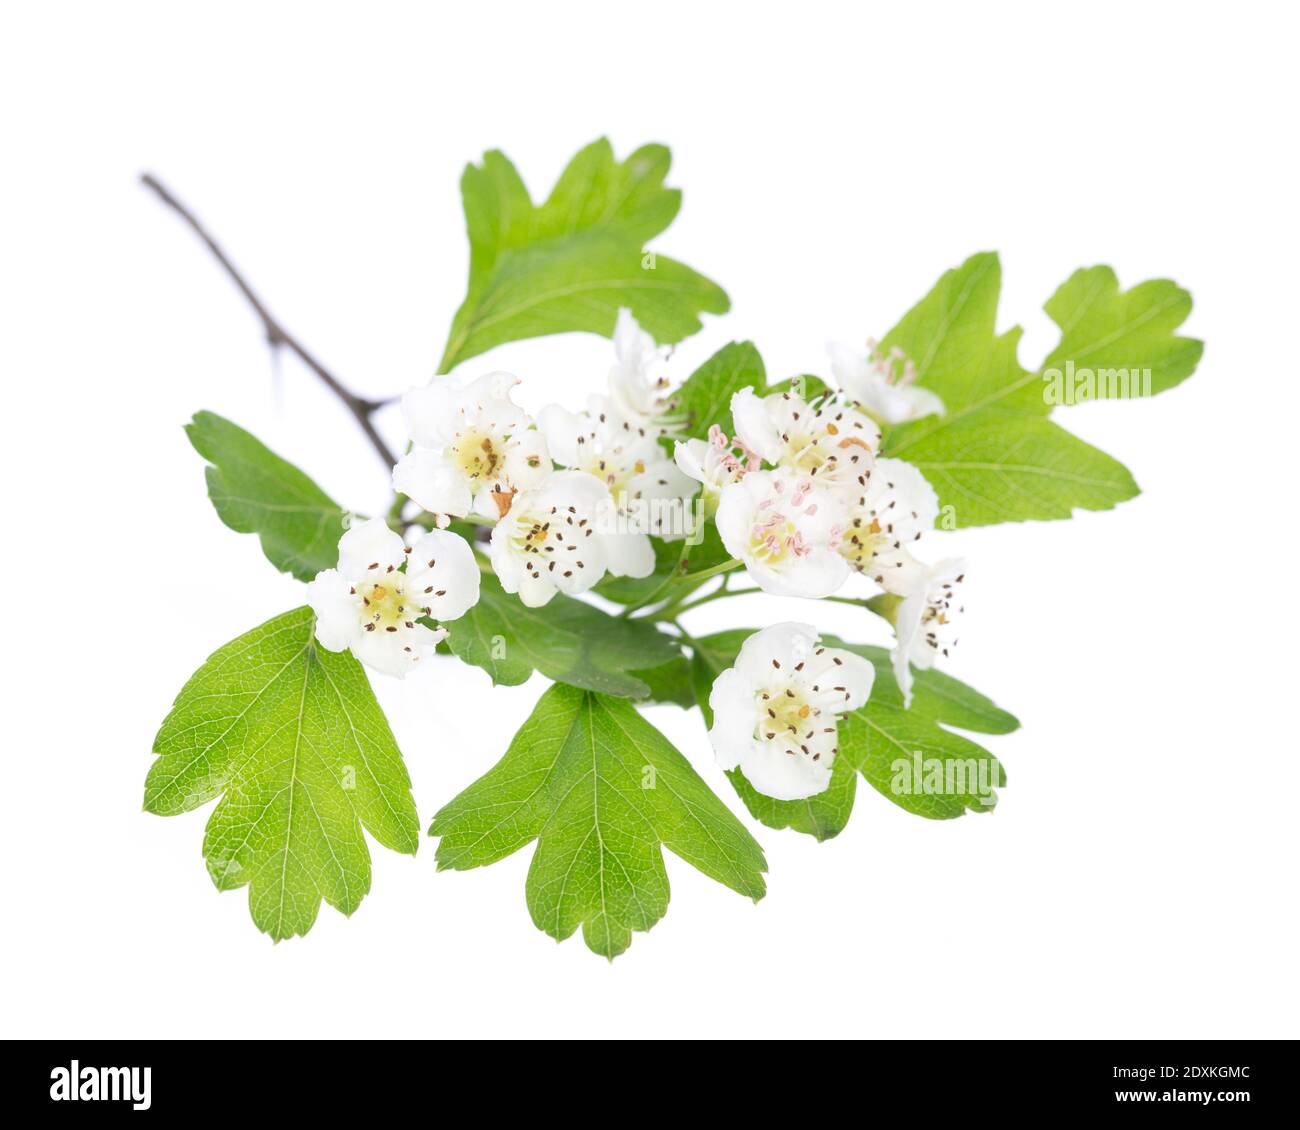 healing plants: Hawthorn (Crataegus monogyna) flowers and leaves on white background Stock Photo